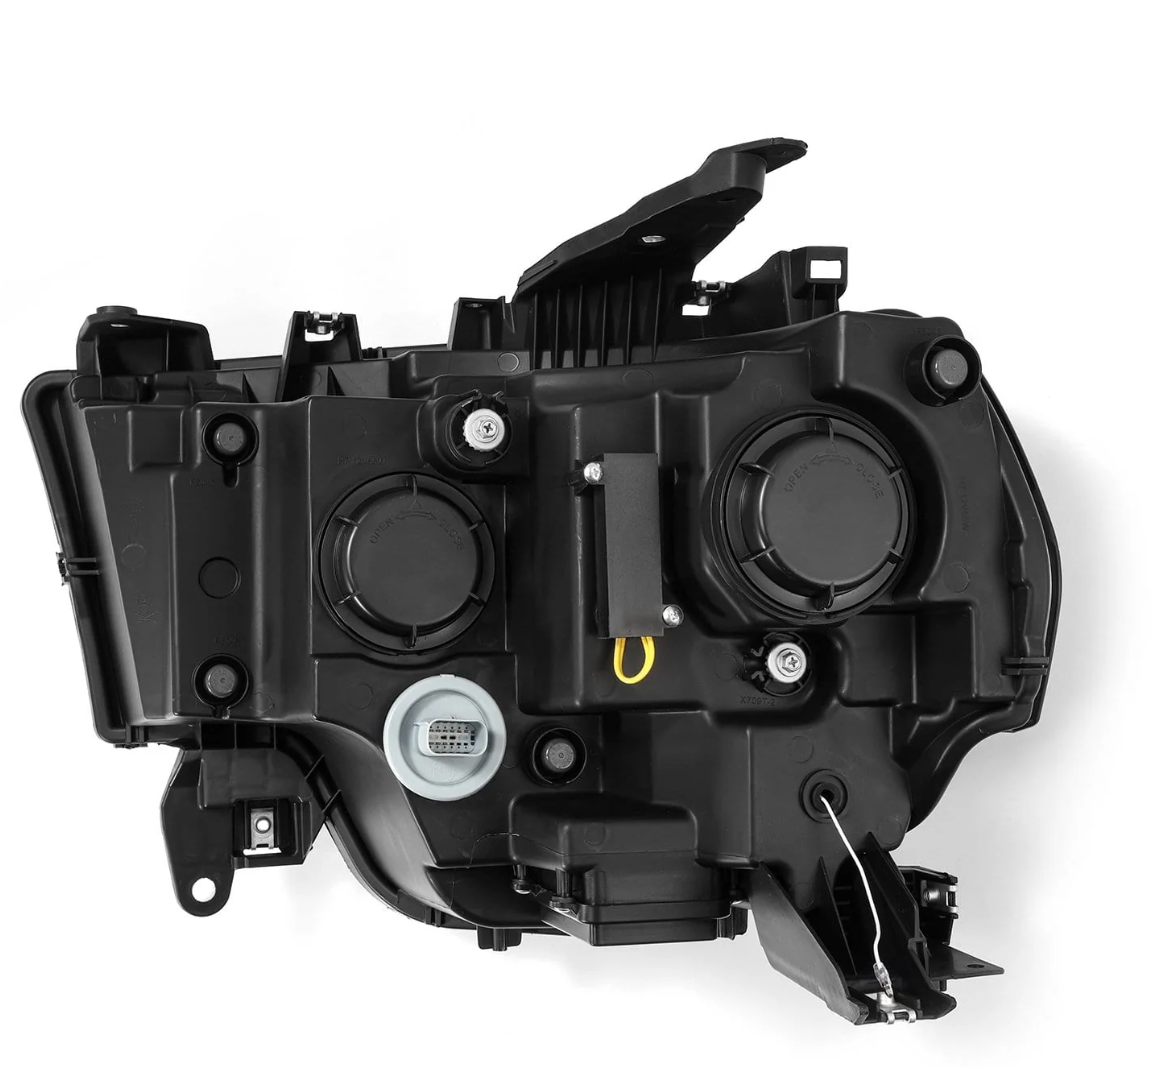 AlphaRex 19-22 Ram 2500/3500/4500/5500 PRO-Series Halogen Projector Headlights Alpha-Black